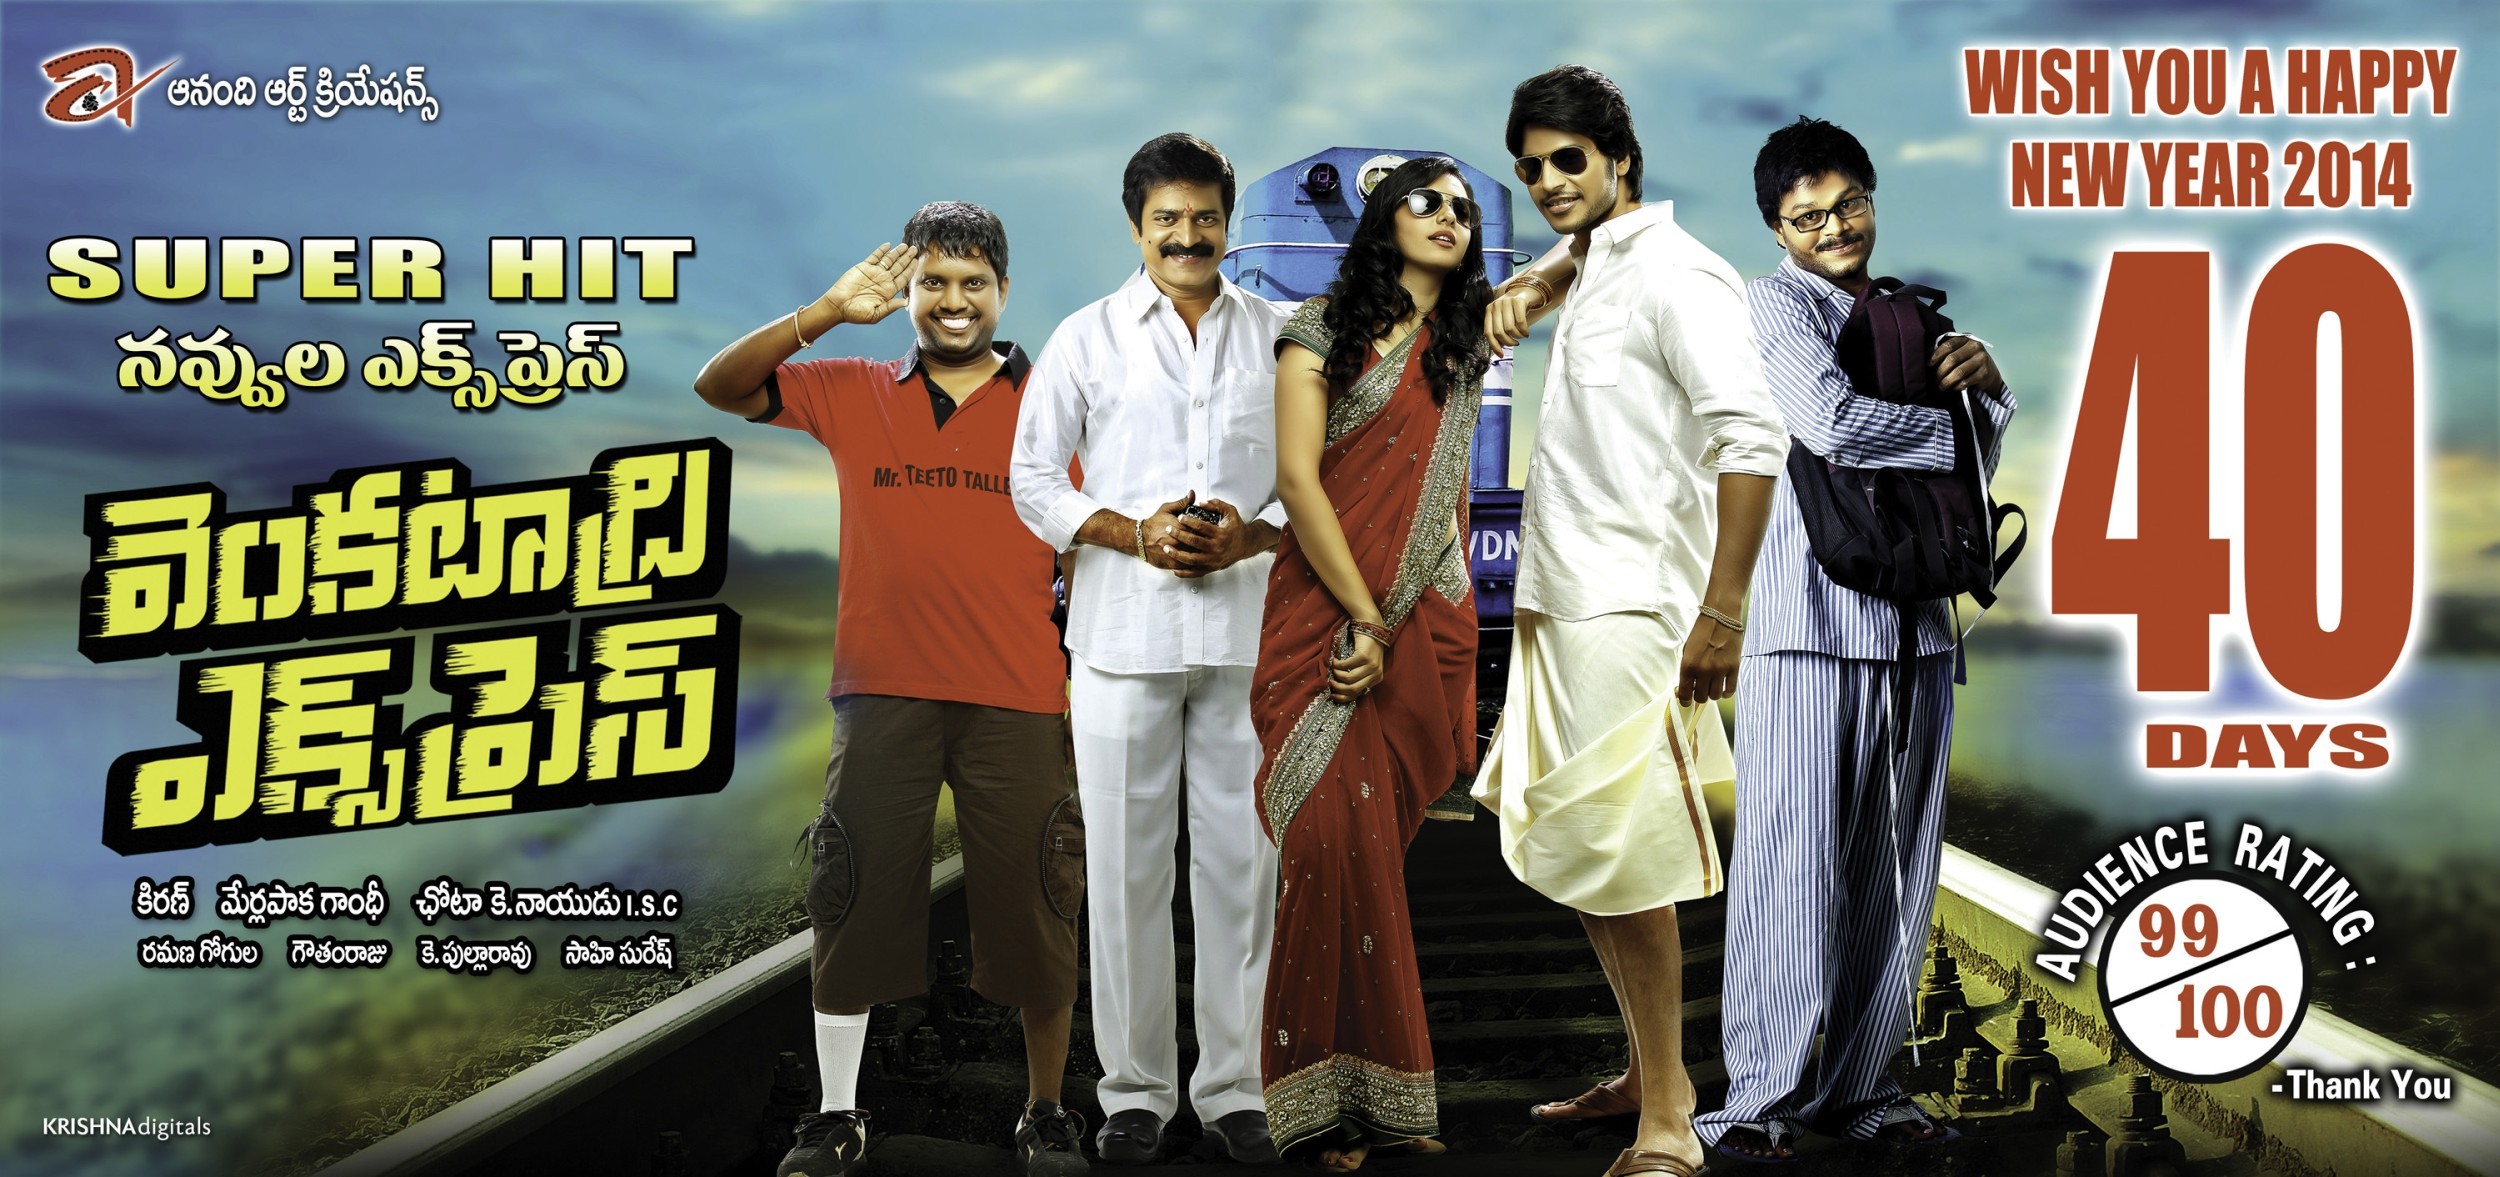 Mega Sized Movie Poster Image for Venkatadri Express (#13 of 17)